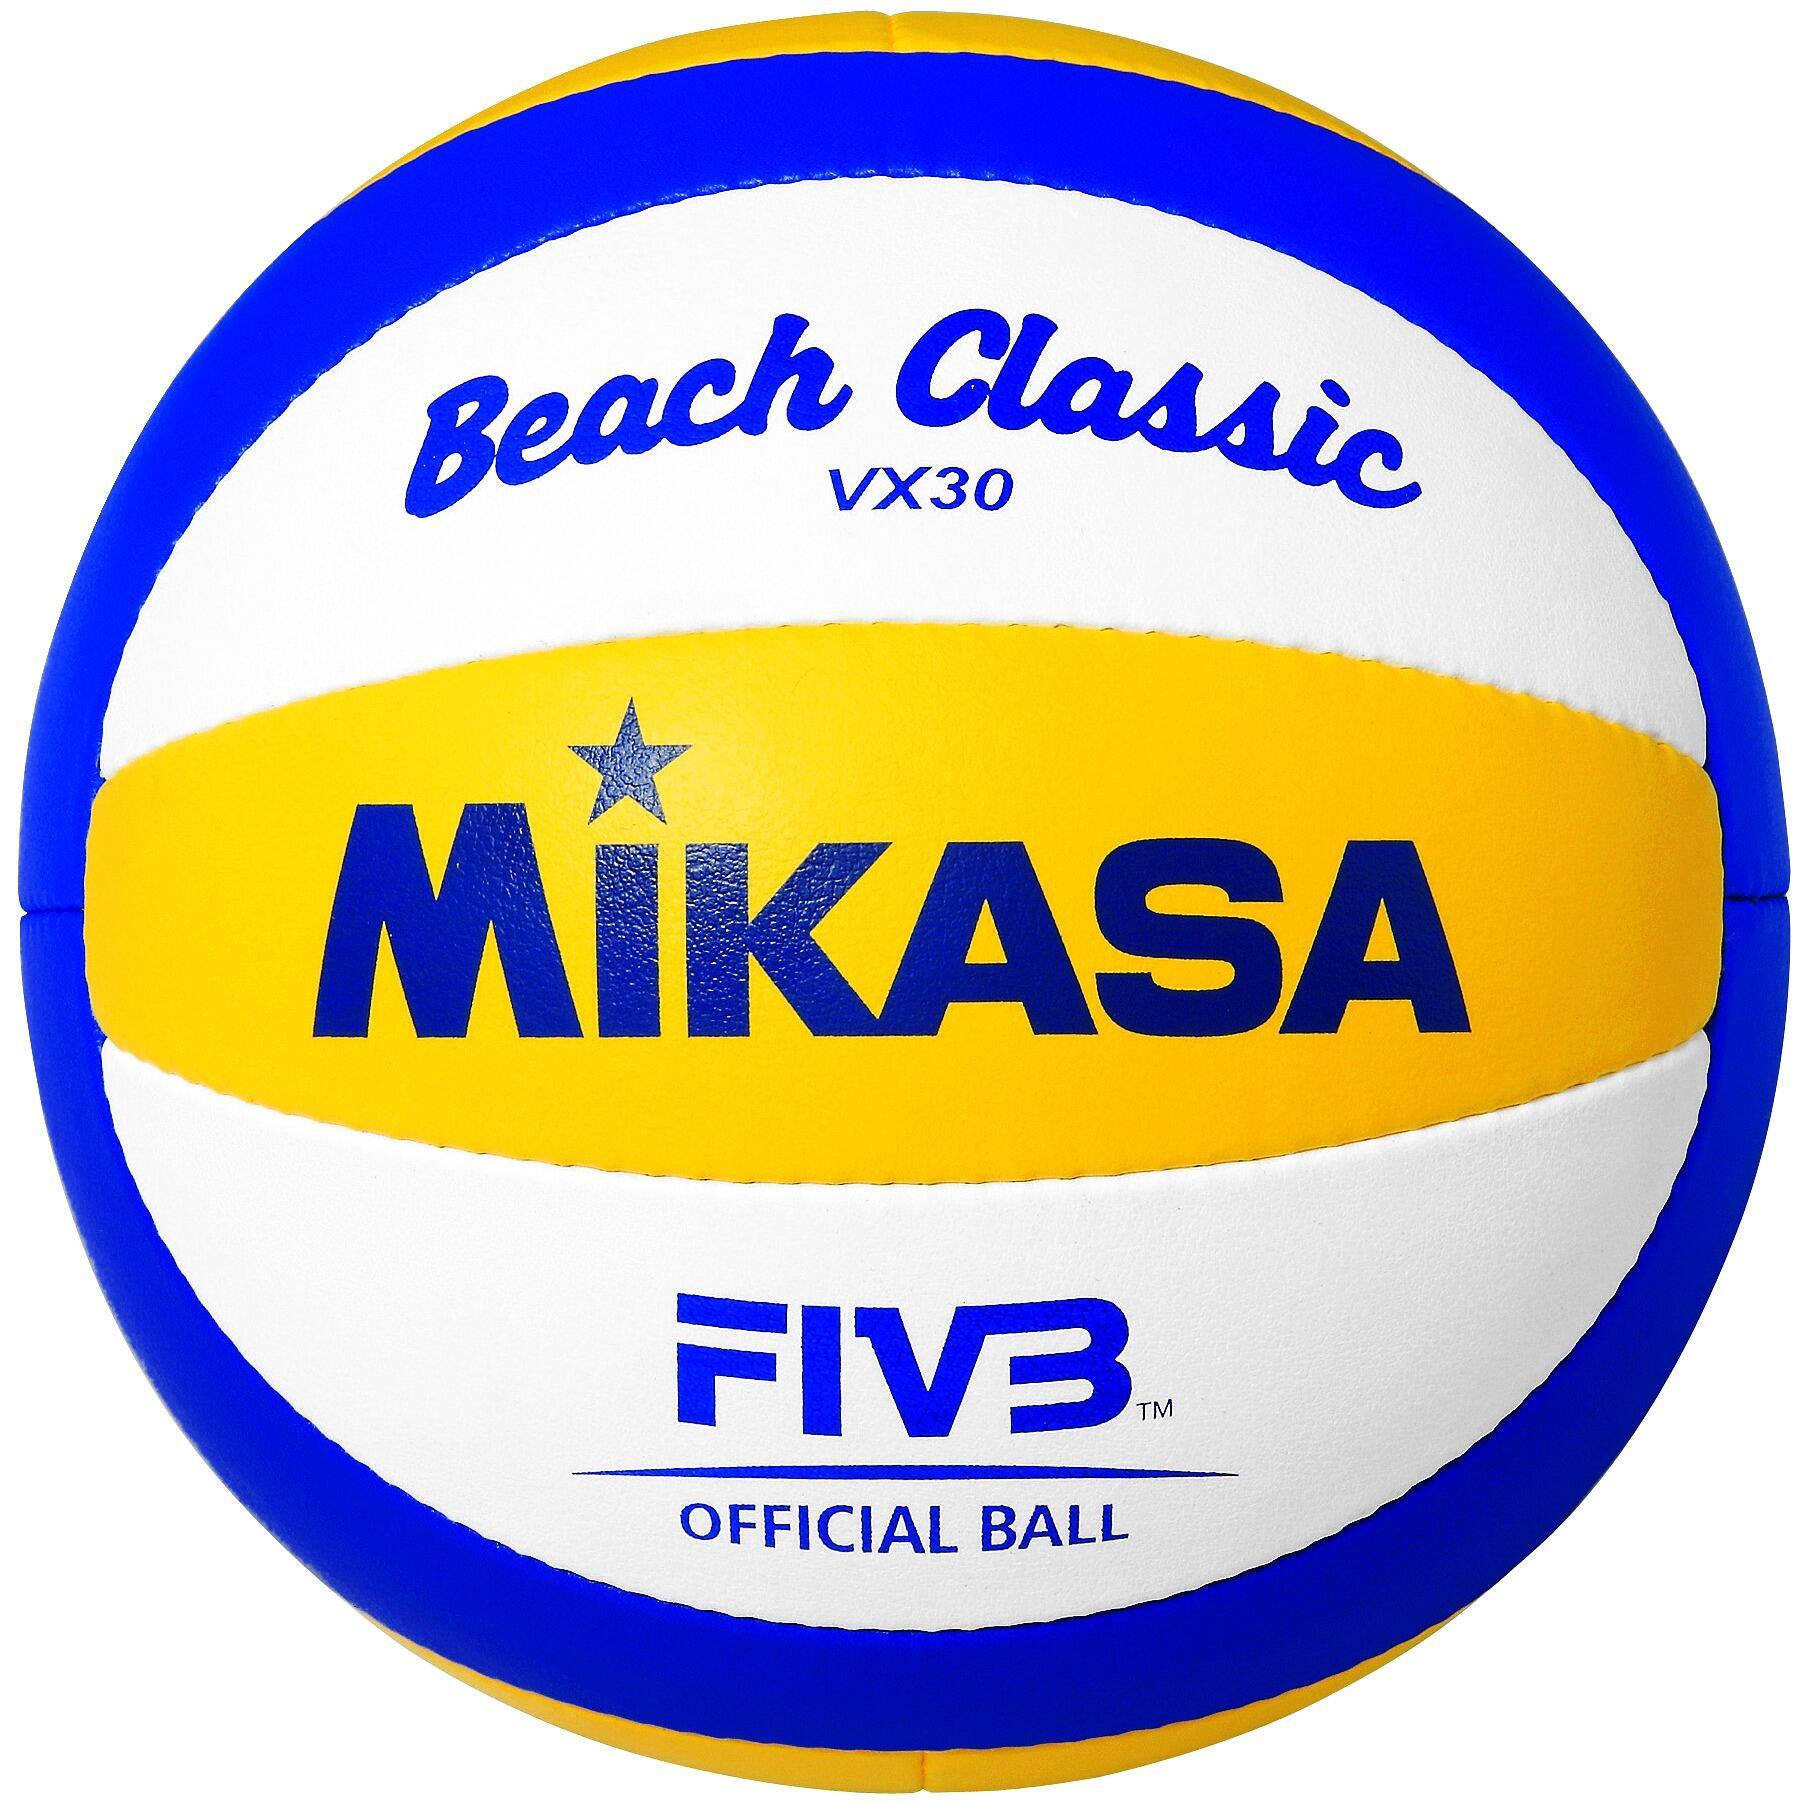 Mikasa Beach Volleyball Beach Classic VX30, красочный original mikasa kids volleyball skv5 eva sponge material child soft ball fivb official inspected mikasa volleyball